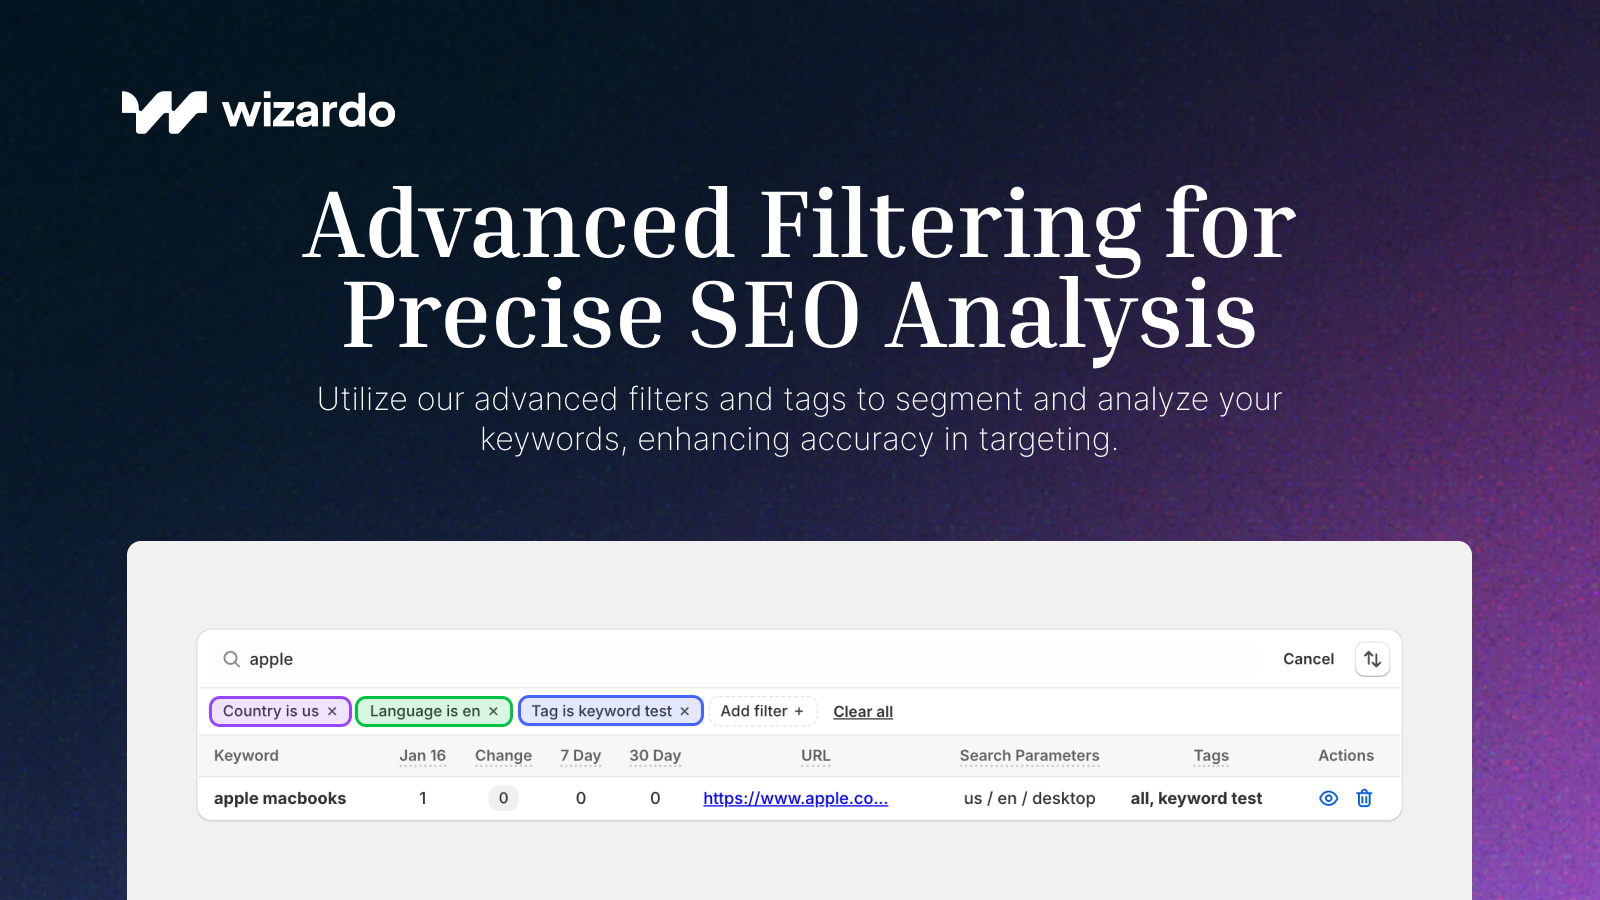 Wizardo: Advanced Filtering for Precise SEO Analysis